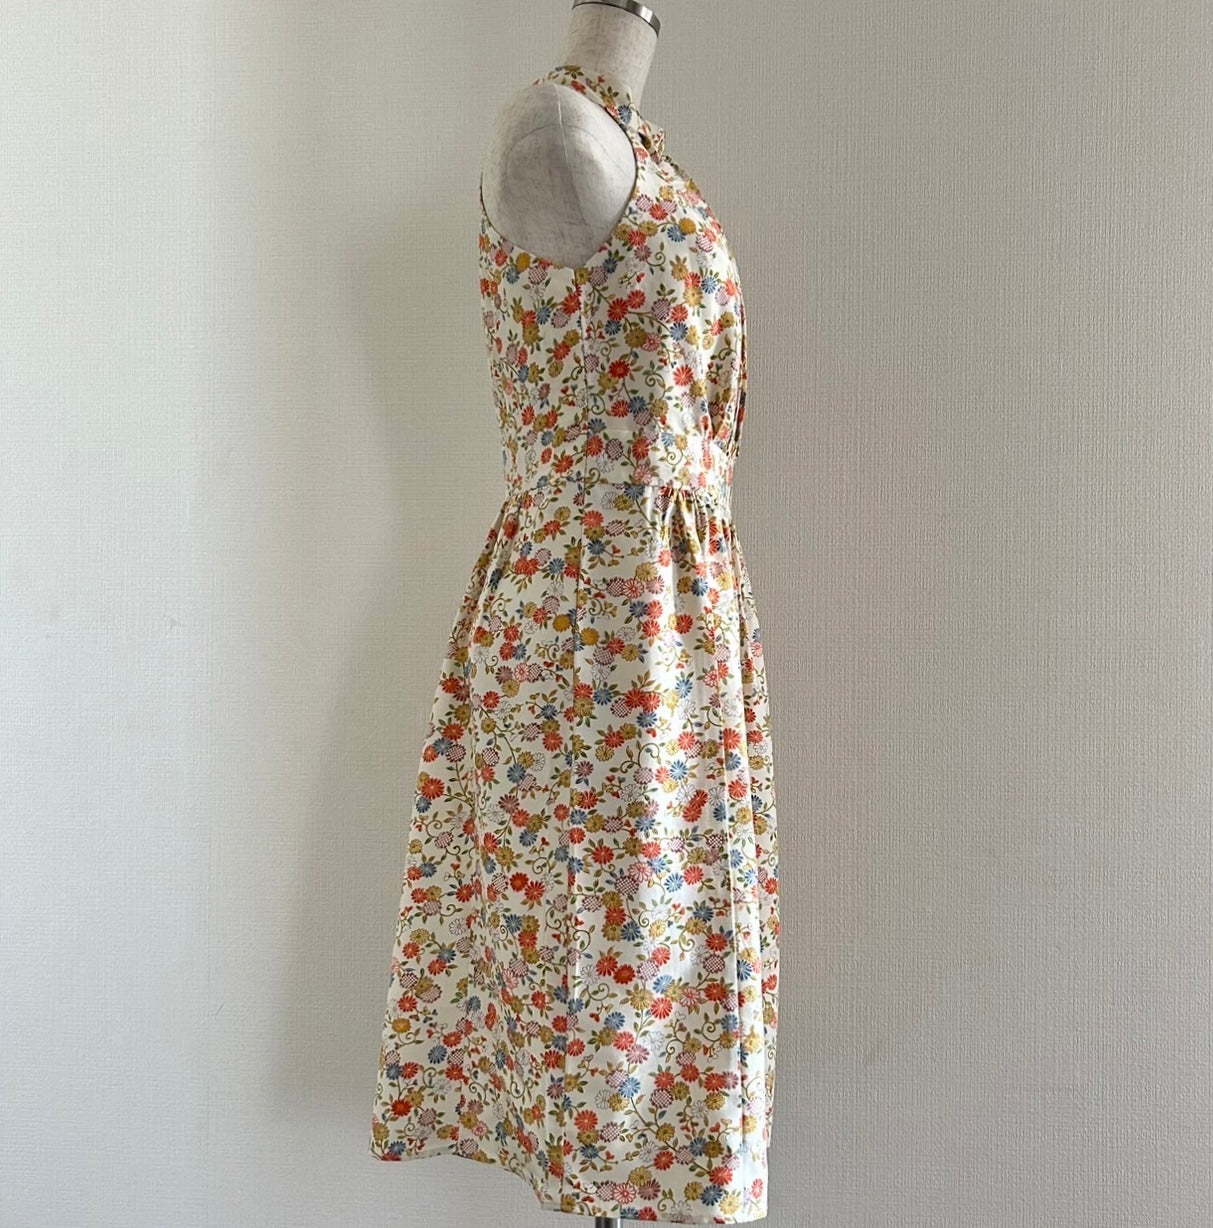 Silk Kimono dress, Komon 小紋,  hand crafted, Upcycled, #pre23